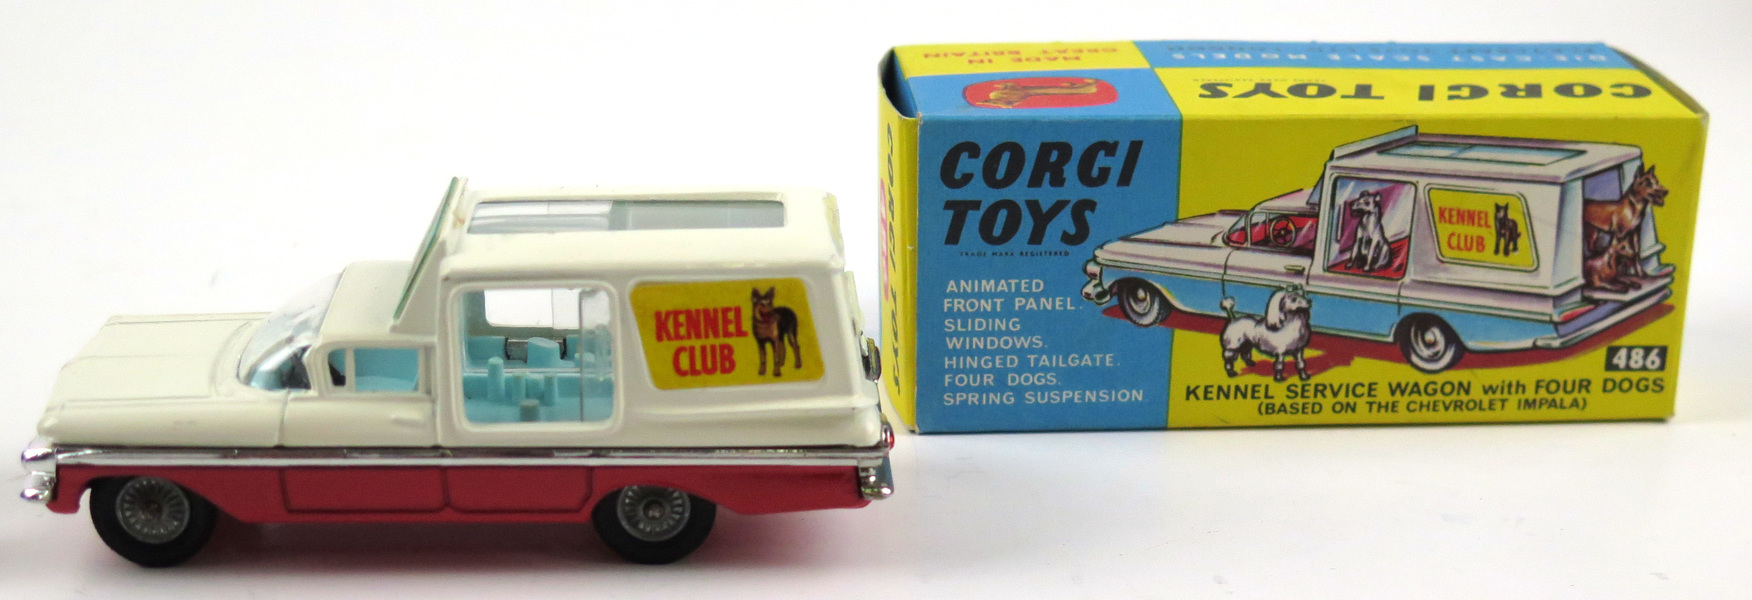 Modellbil, Corgi Toys 486, Kennel Club, med 4 hundar,_5309a_8d8a101783b7c4c_lg.jpeg